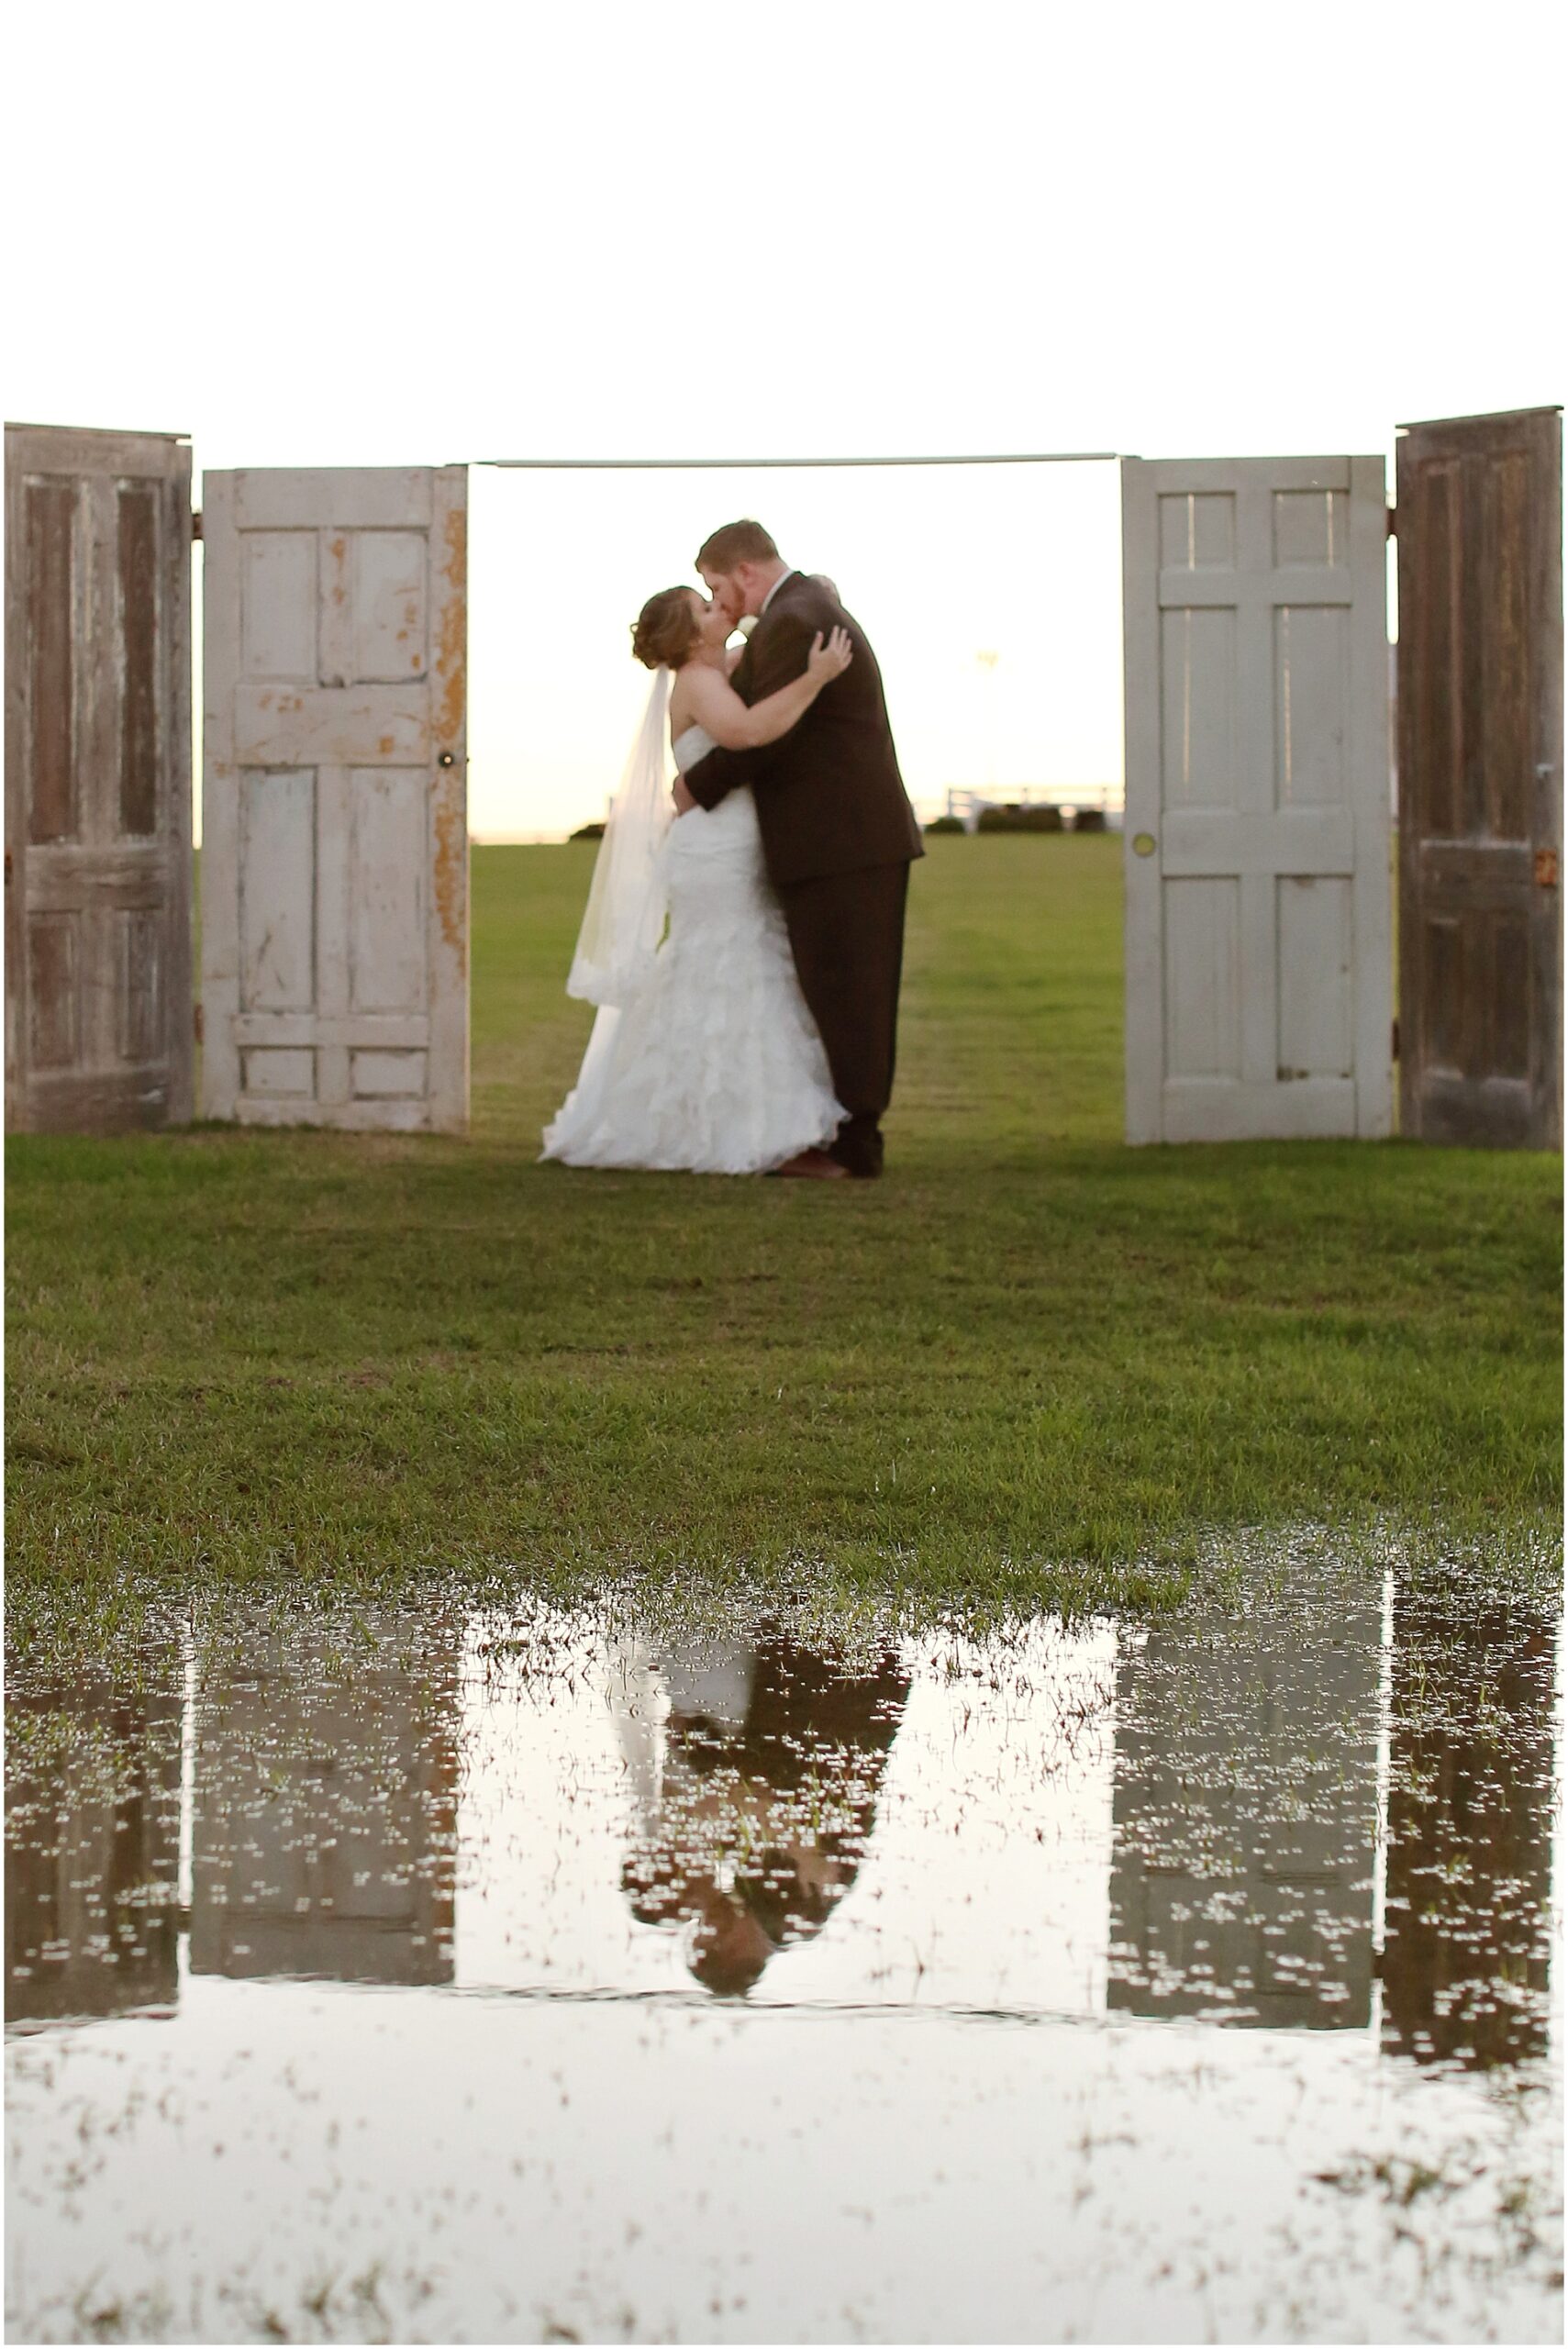 Twin Oaks Farm Wedding | Two Chics Photography | www.twochicsphotography.com